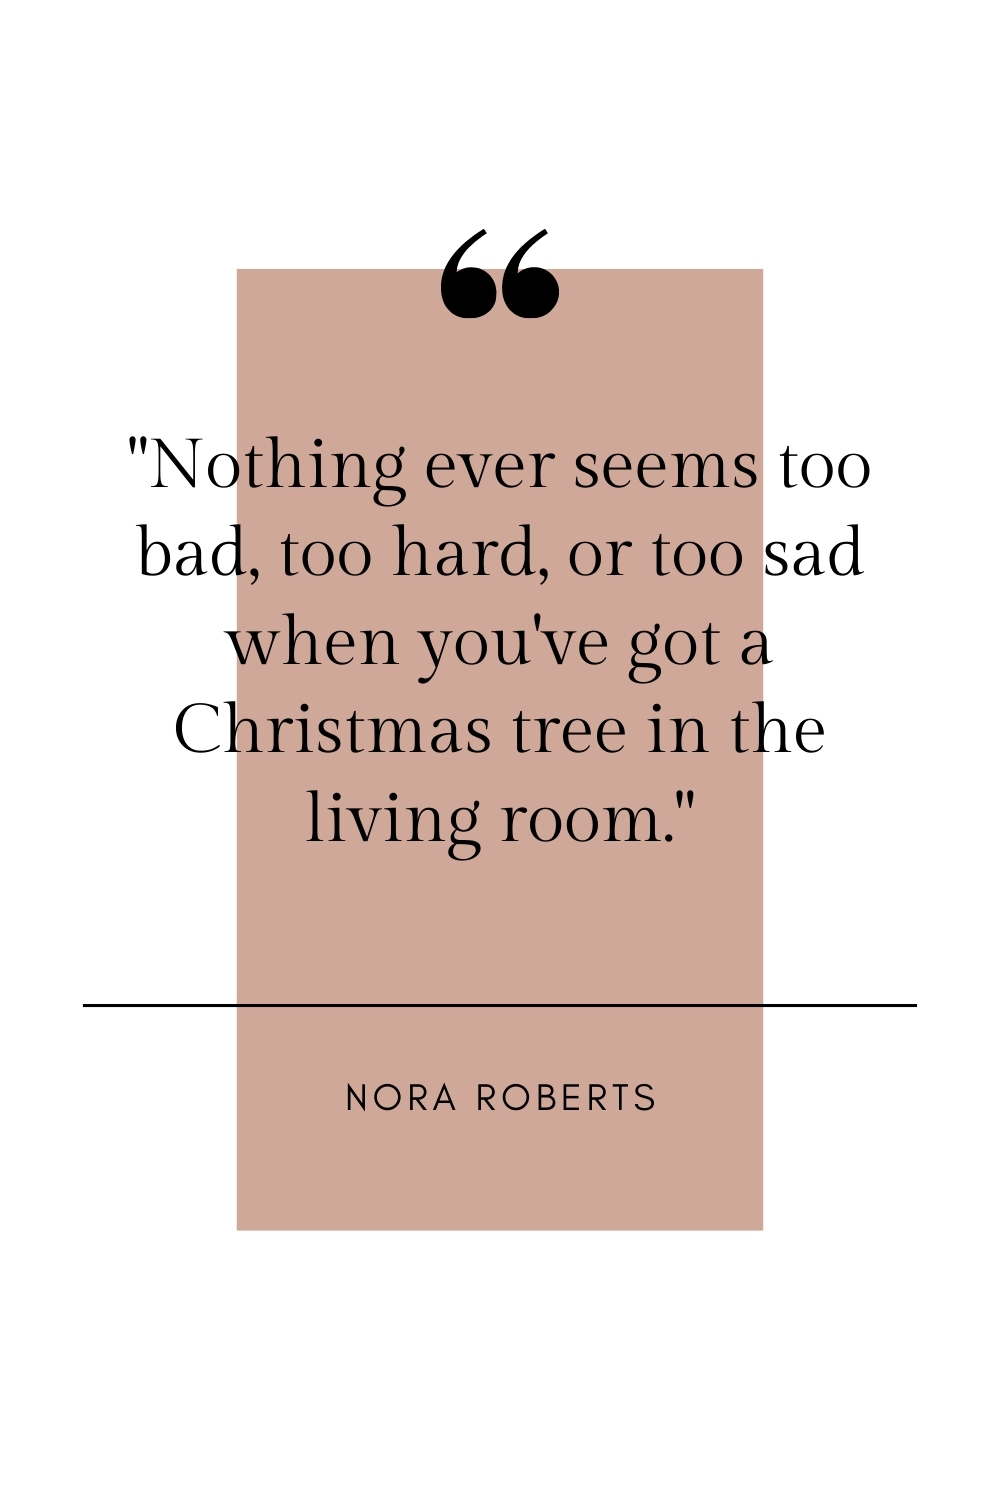 nora roberts quote